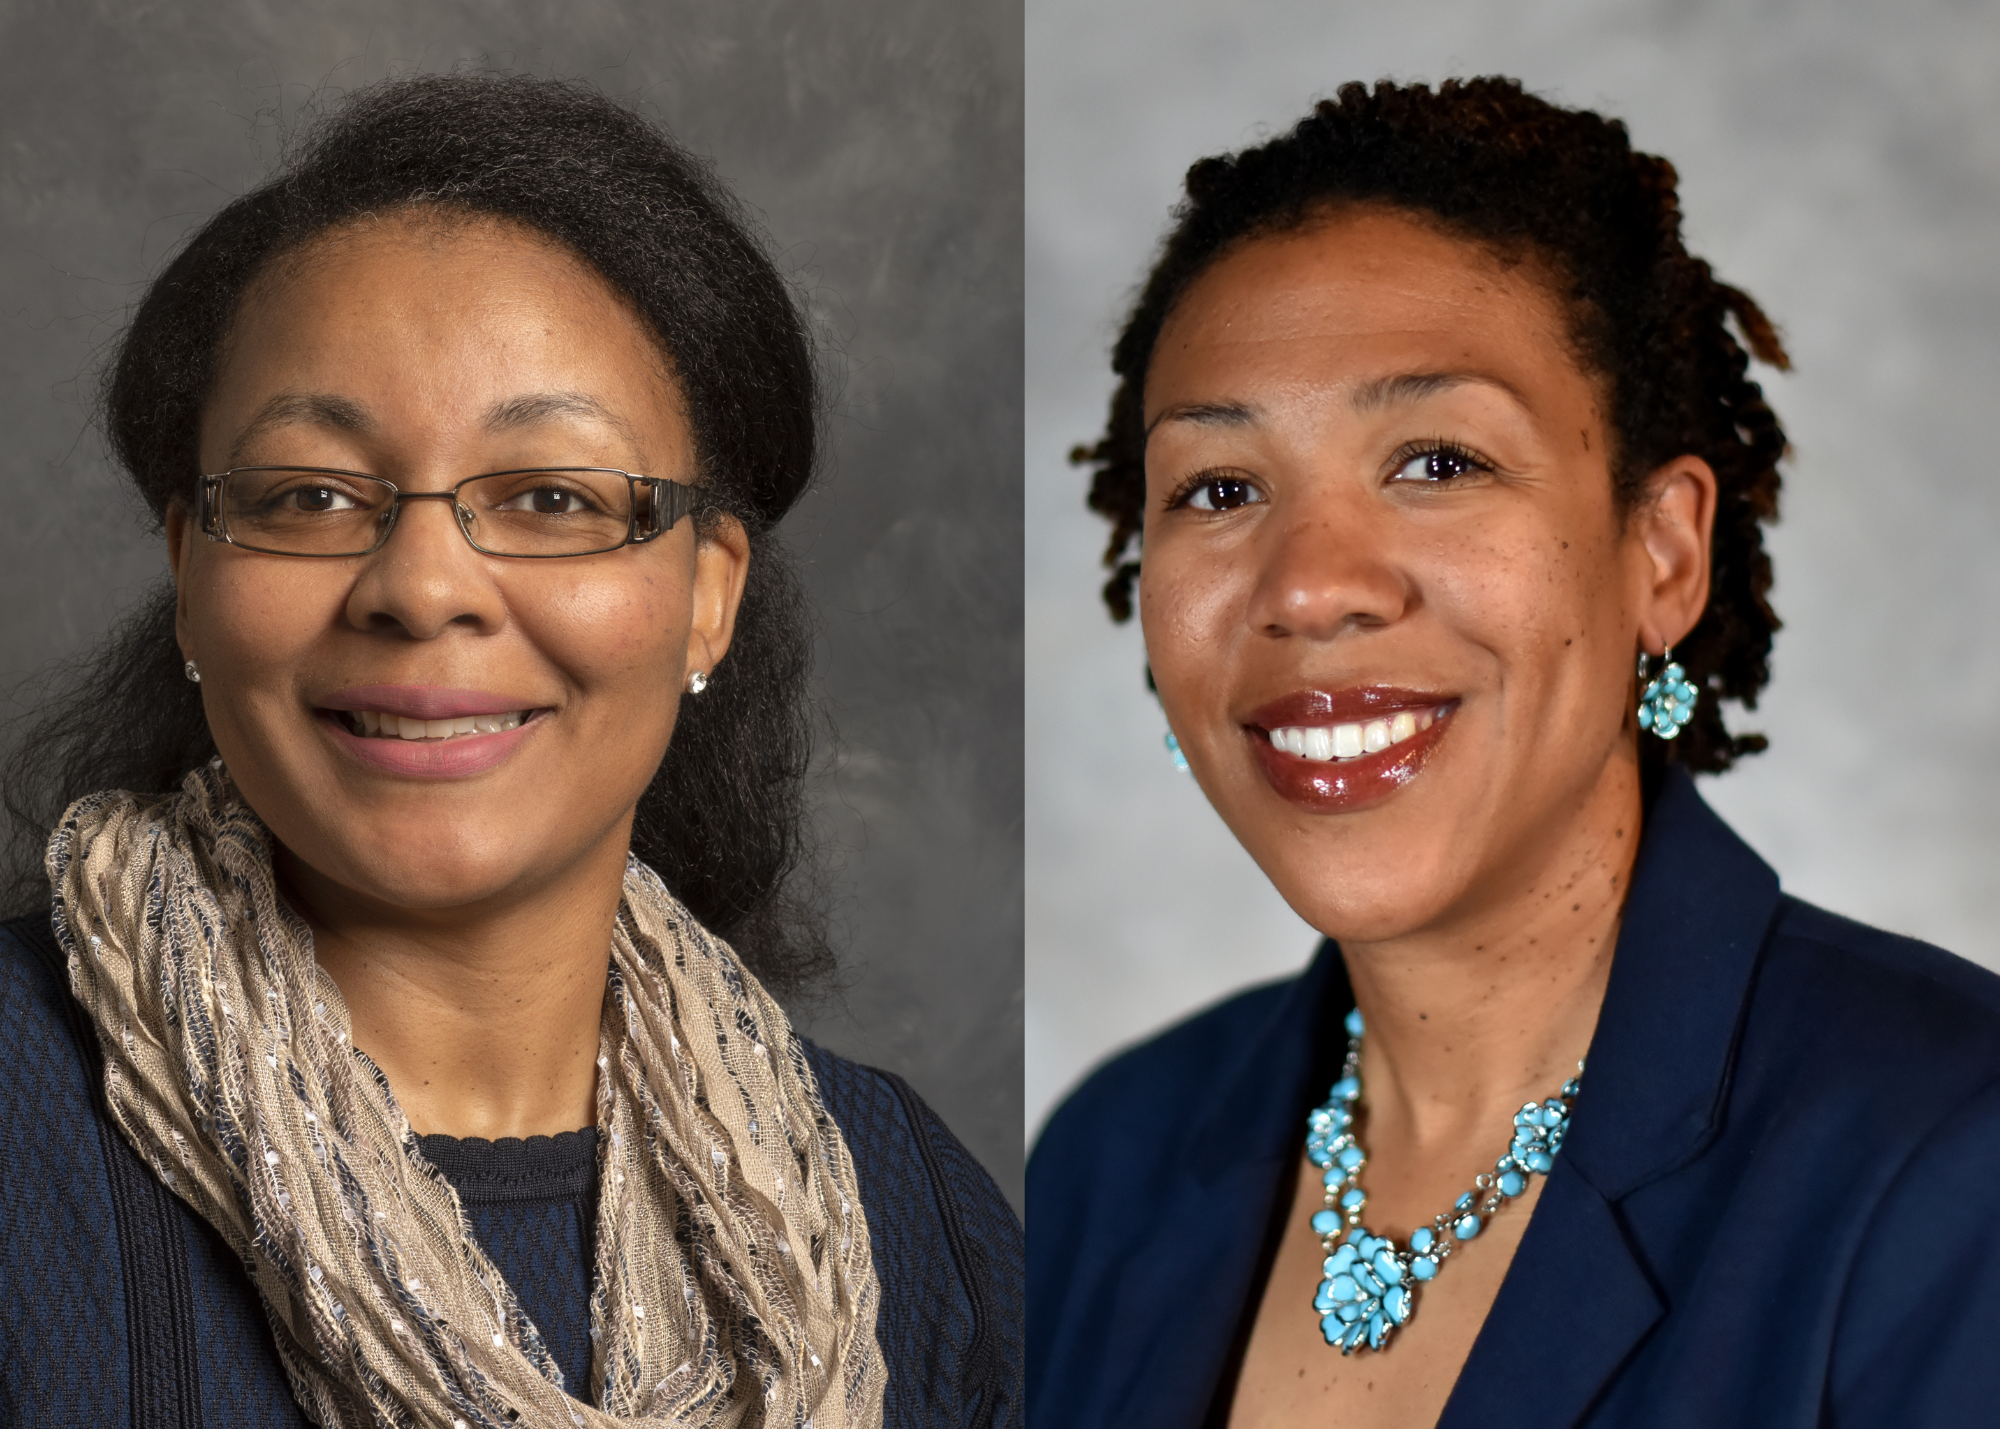 The headshots of Drs. Coretta Jenerette and Danica Fulbright Sumpter